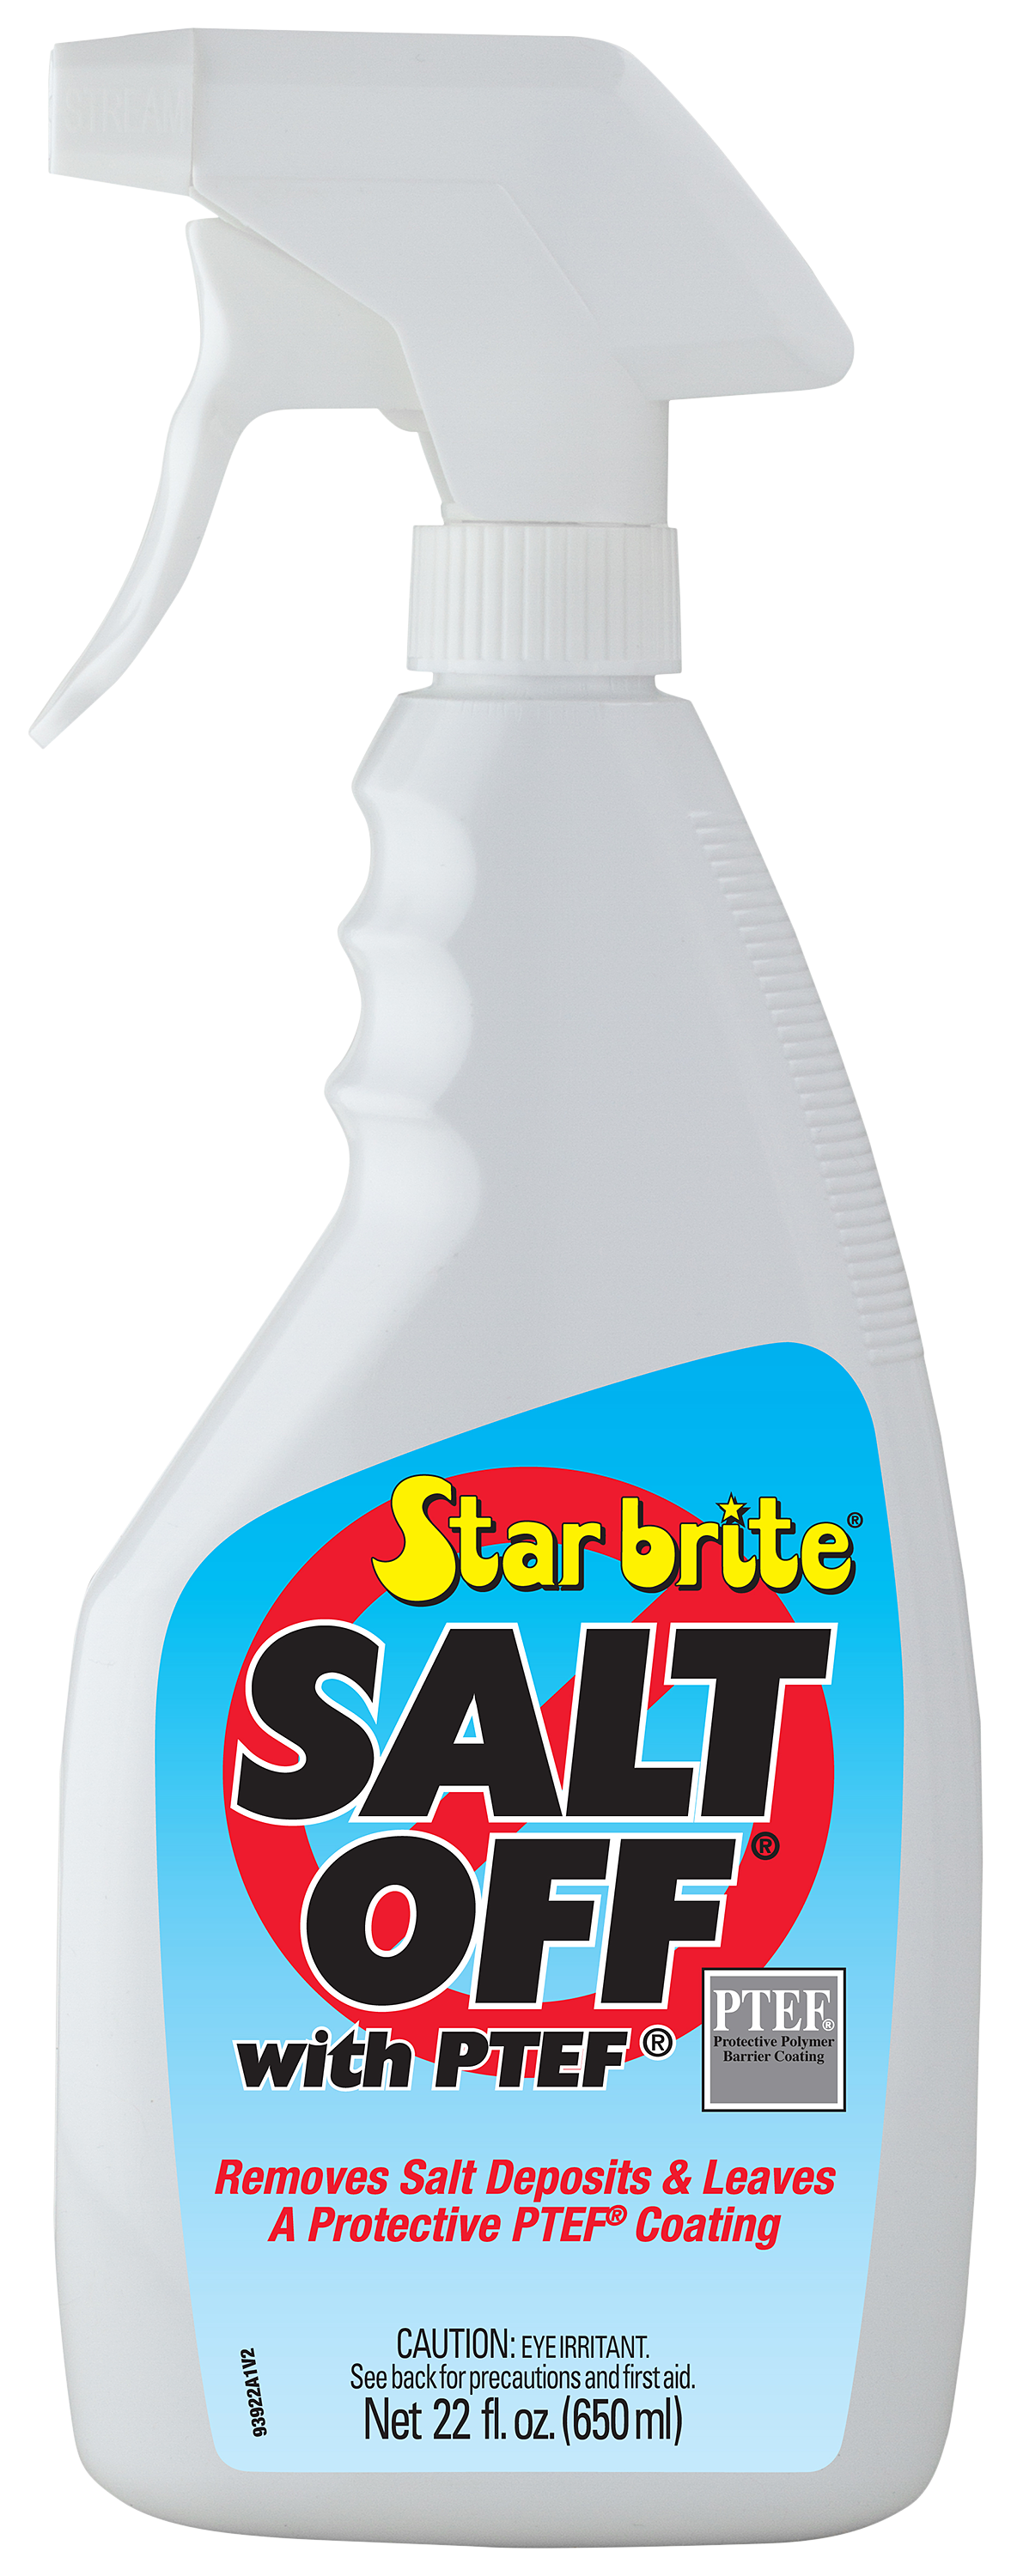 Star brite Salt Off Cleaner/Protectant Liquid 1 gal - Ace Hardware